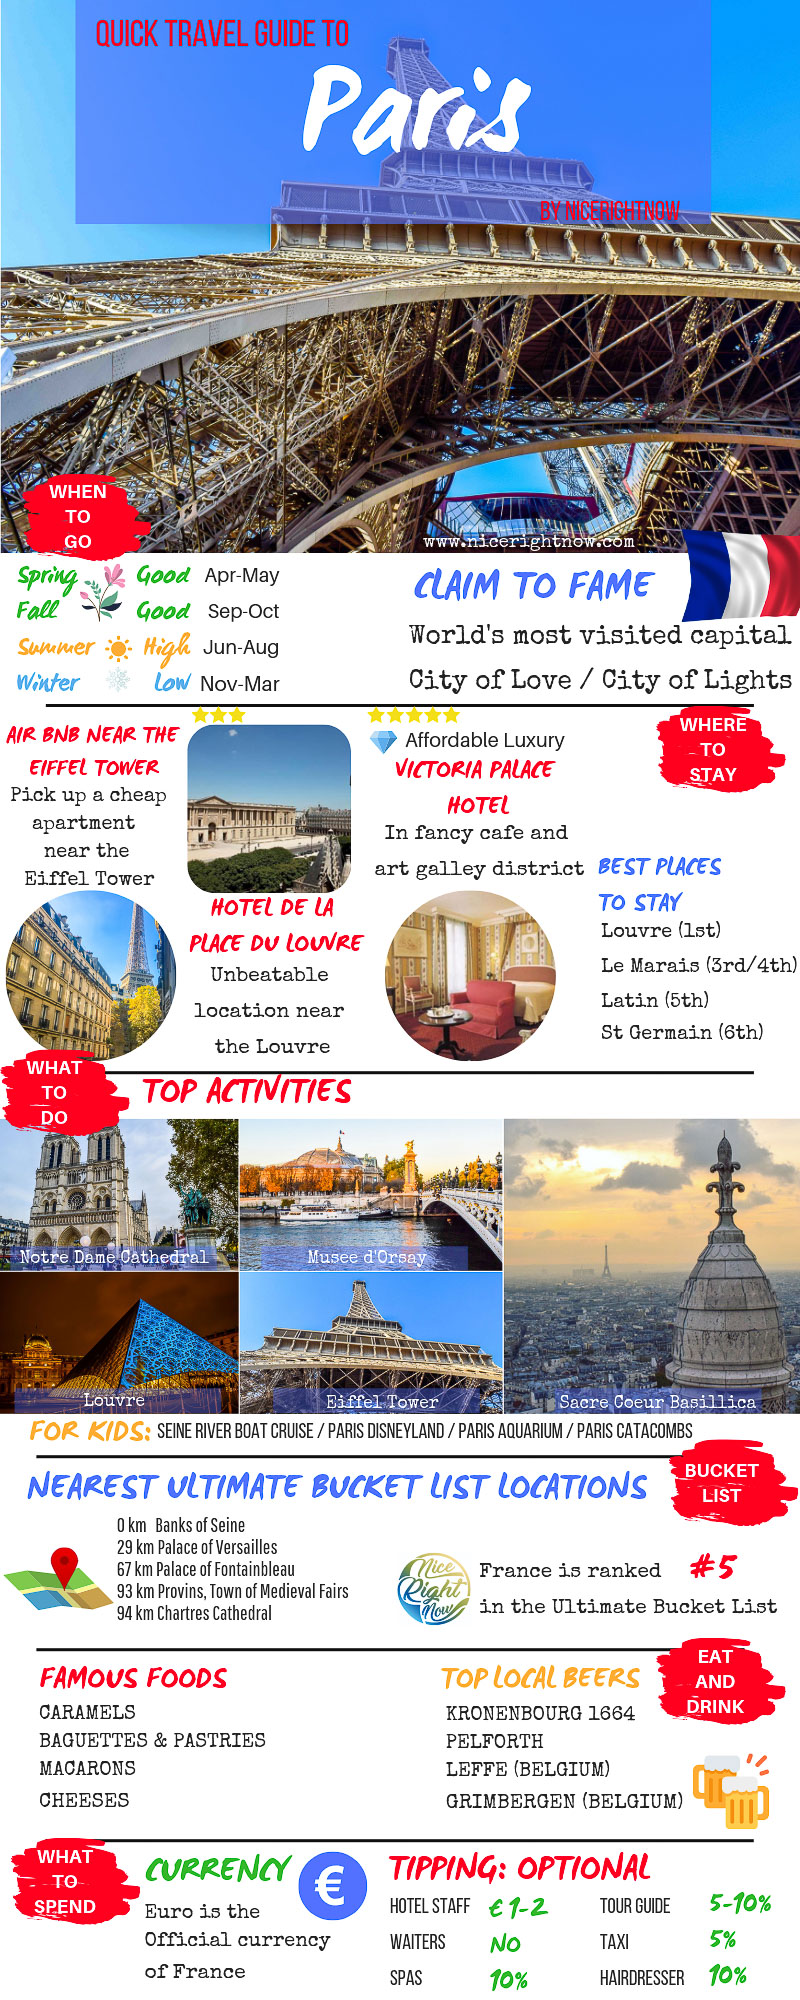 P926 Travel Guide to Paris